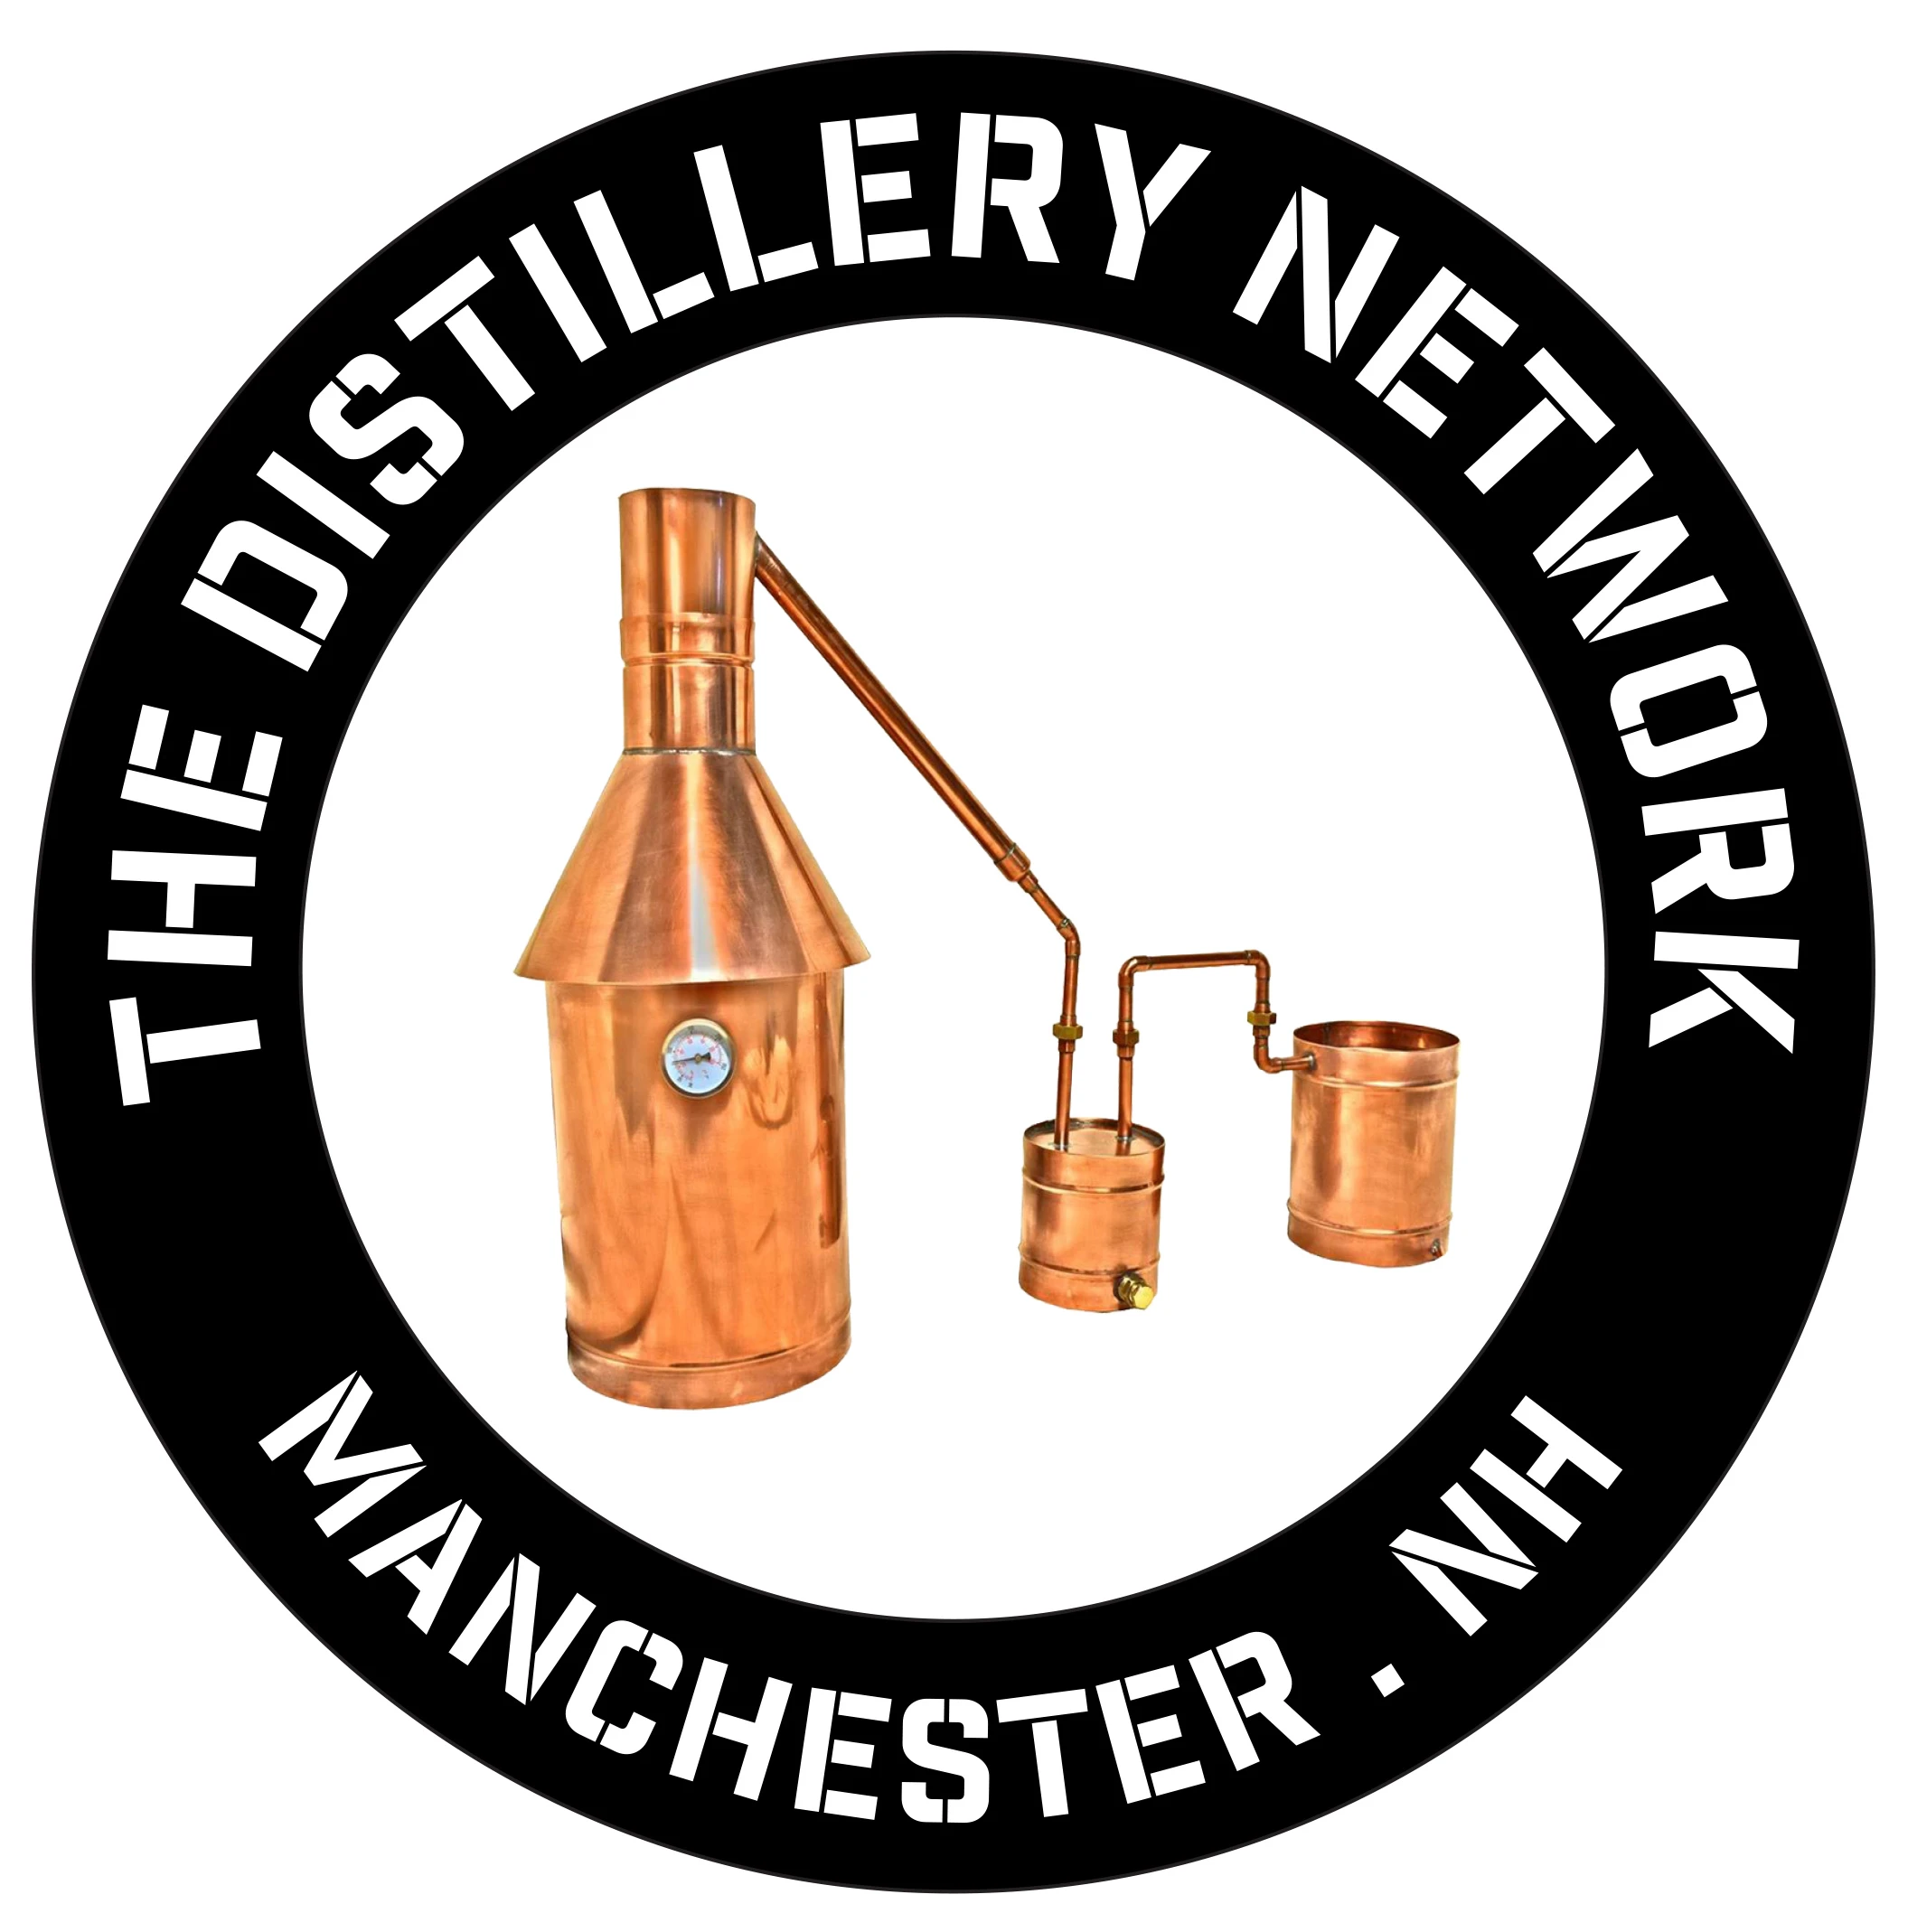 Distillery Network Inc., The